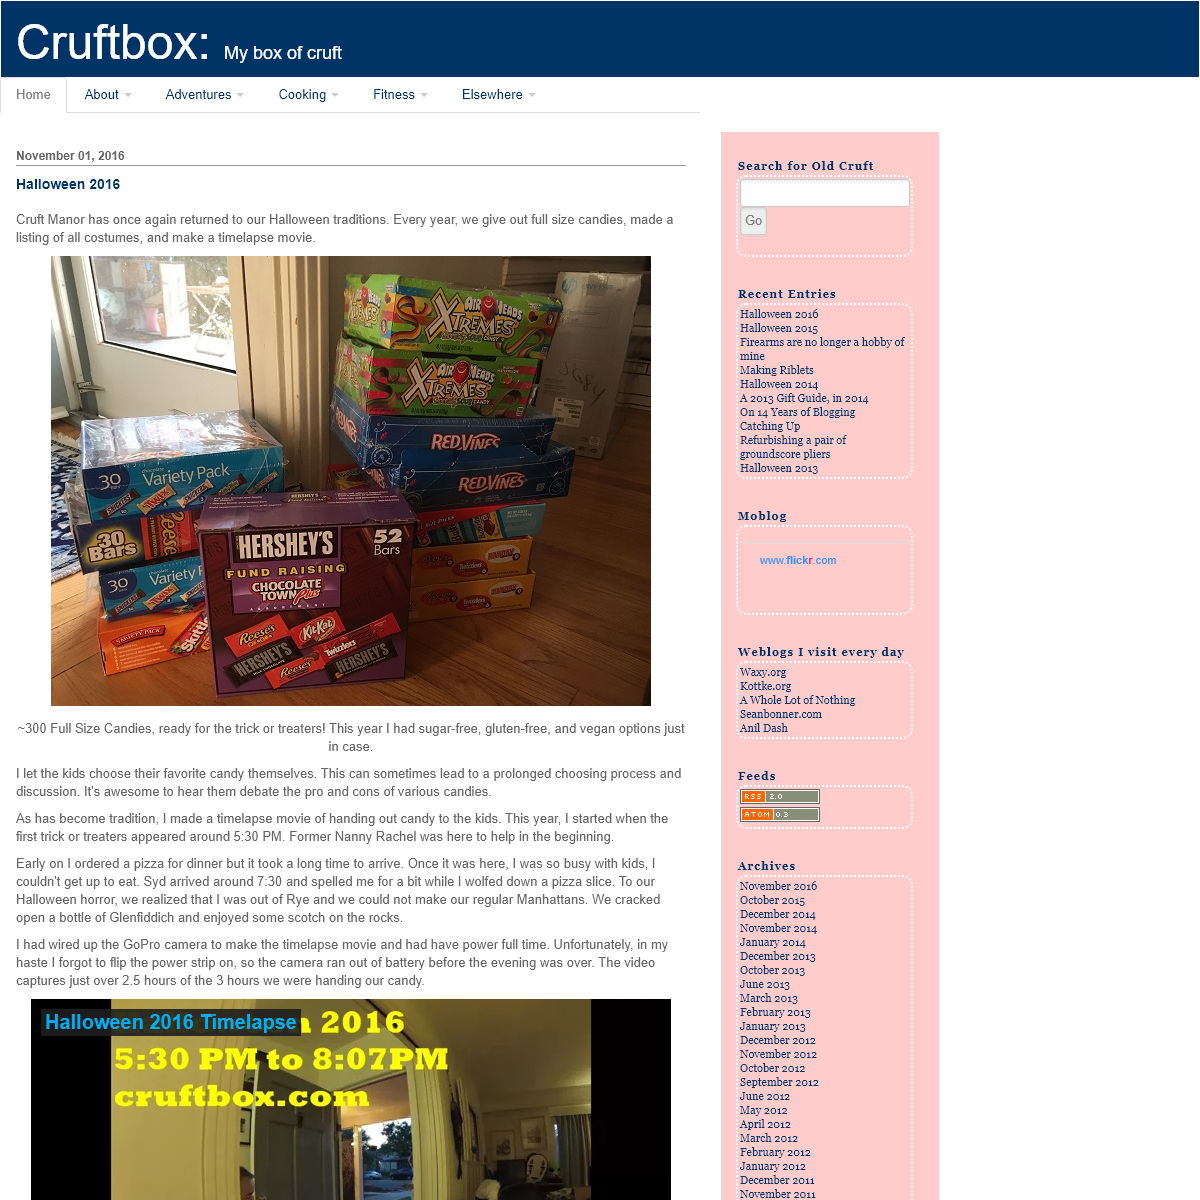 A complete backup of cruftbox.com